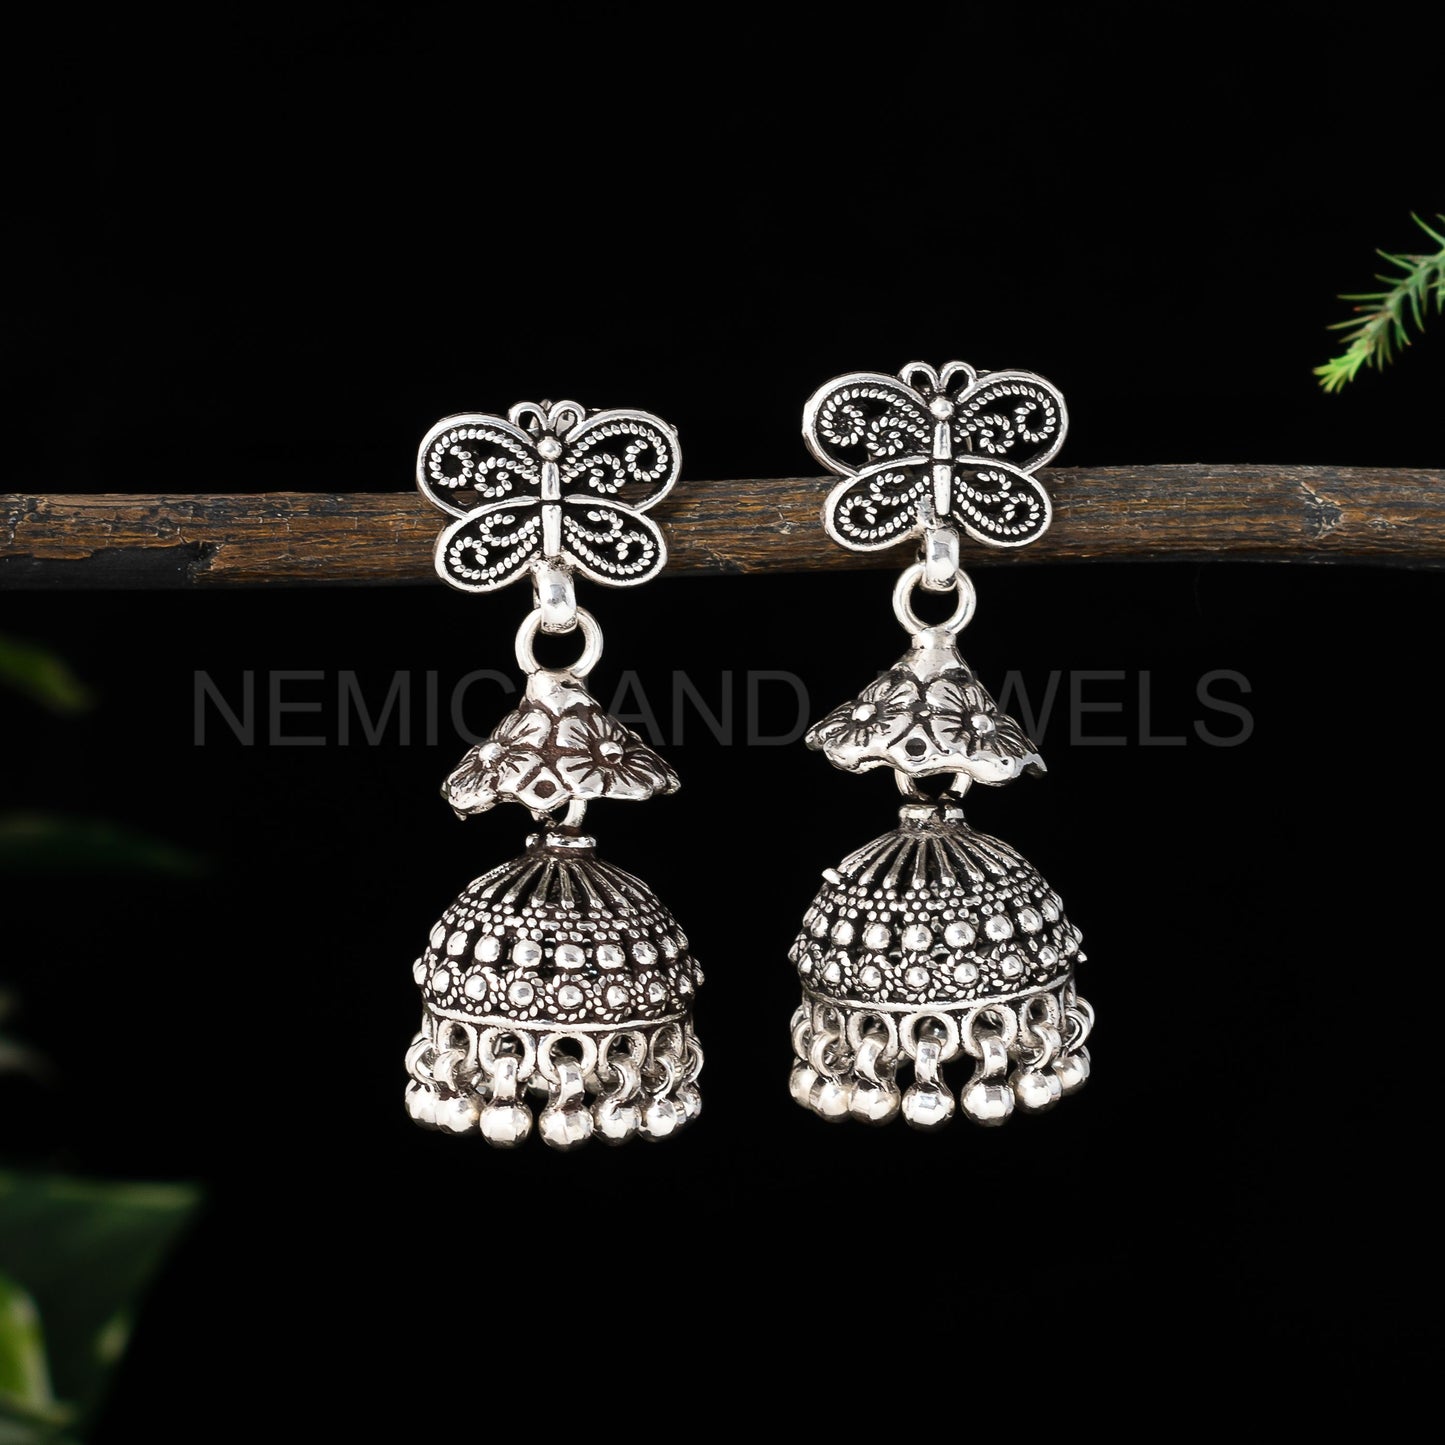 925 Solid Sterling Silver Traditional Jhumka Earrings - Dangle Drop Earrings